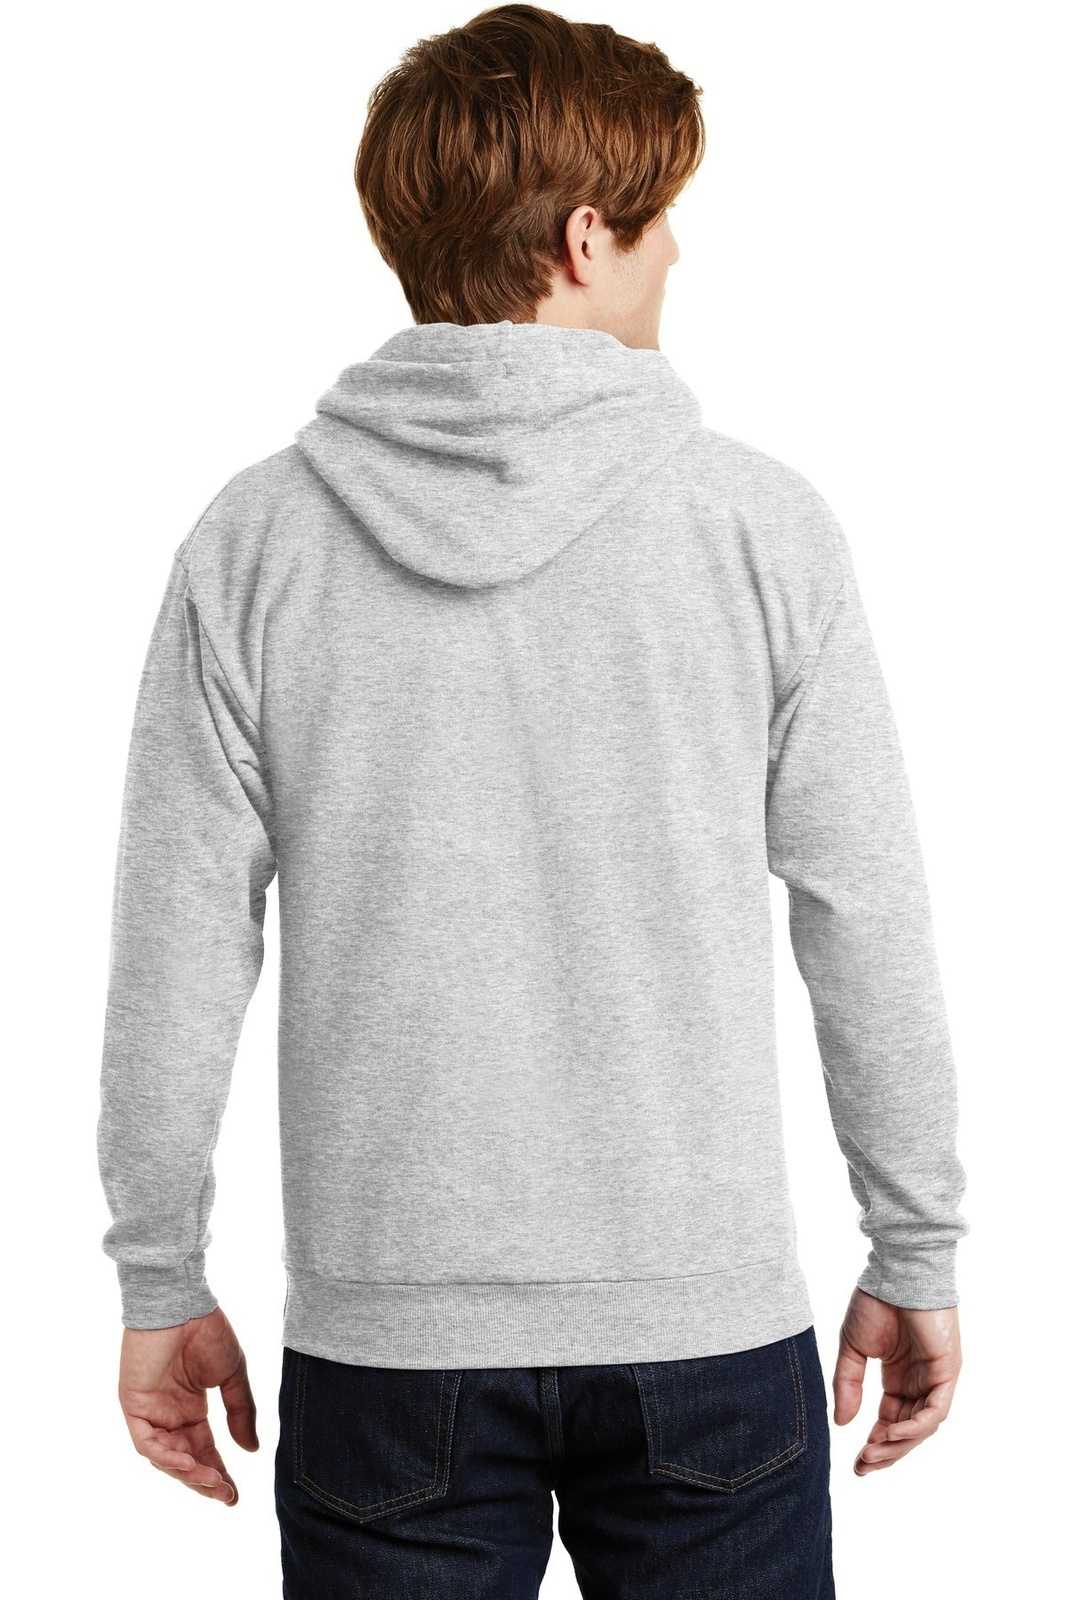 Hanes P170 Ecosmart Pullover Hooded Sweatshirt - Ash - HIT a Double